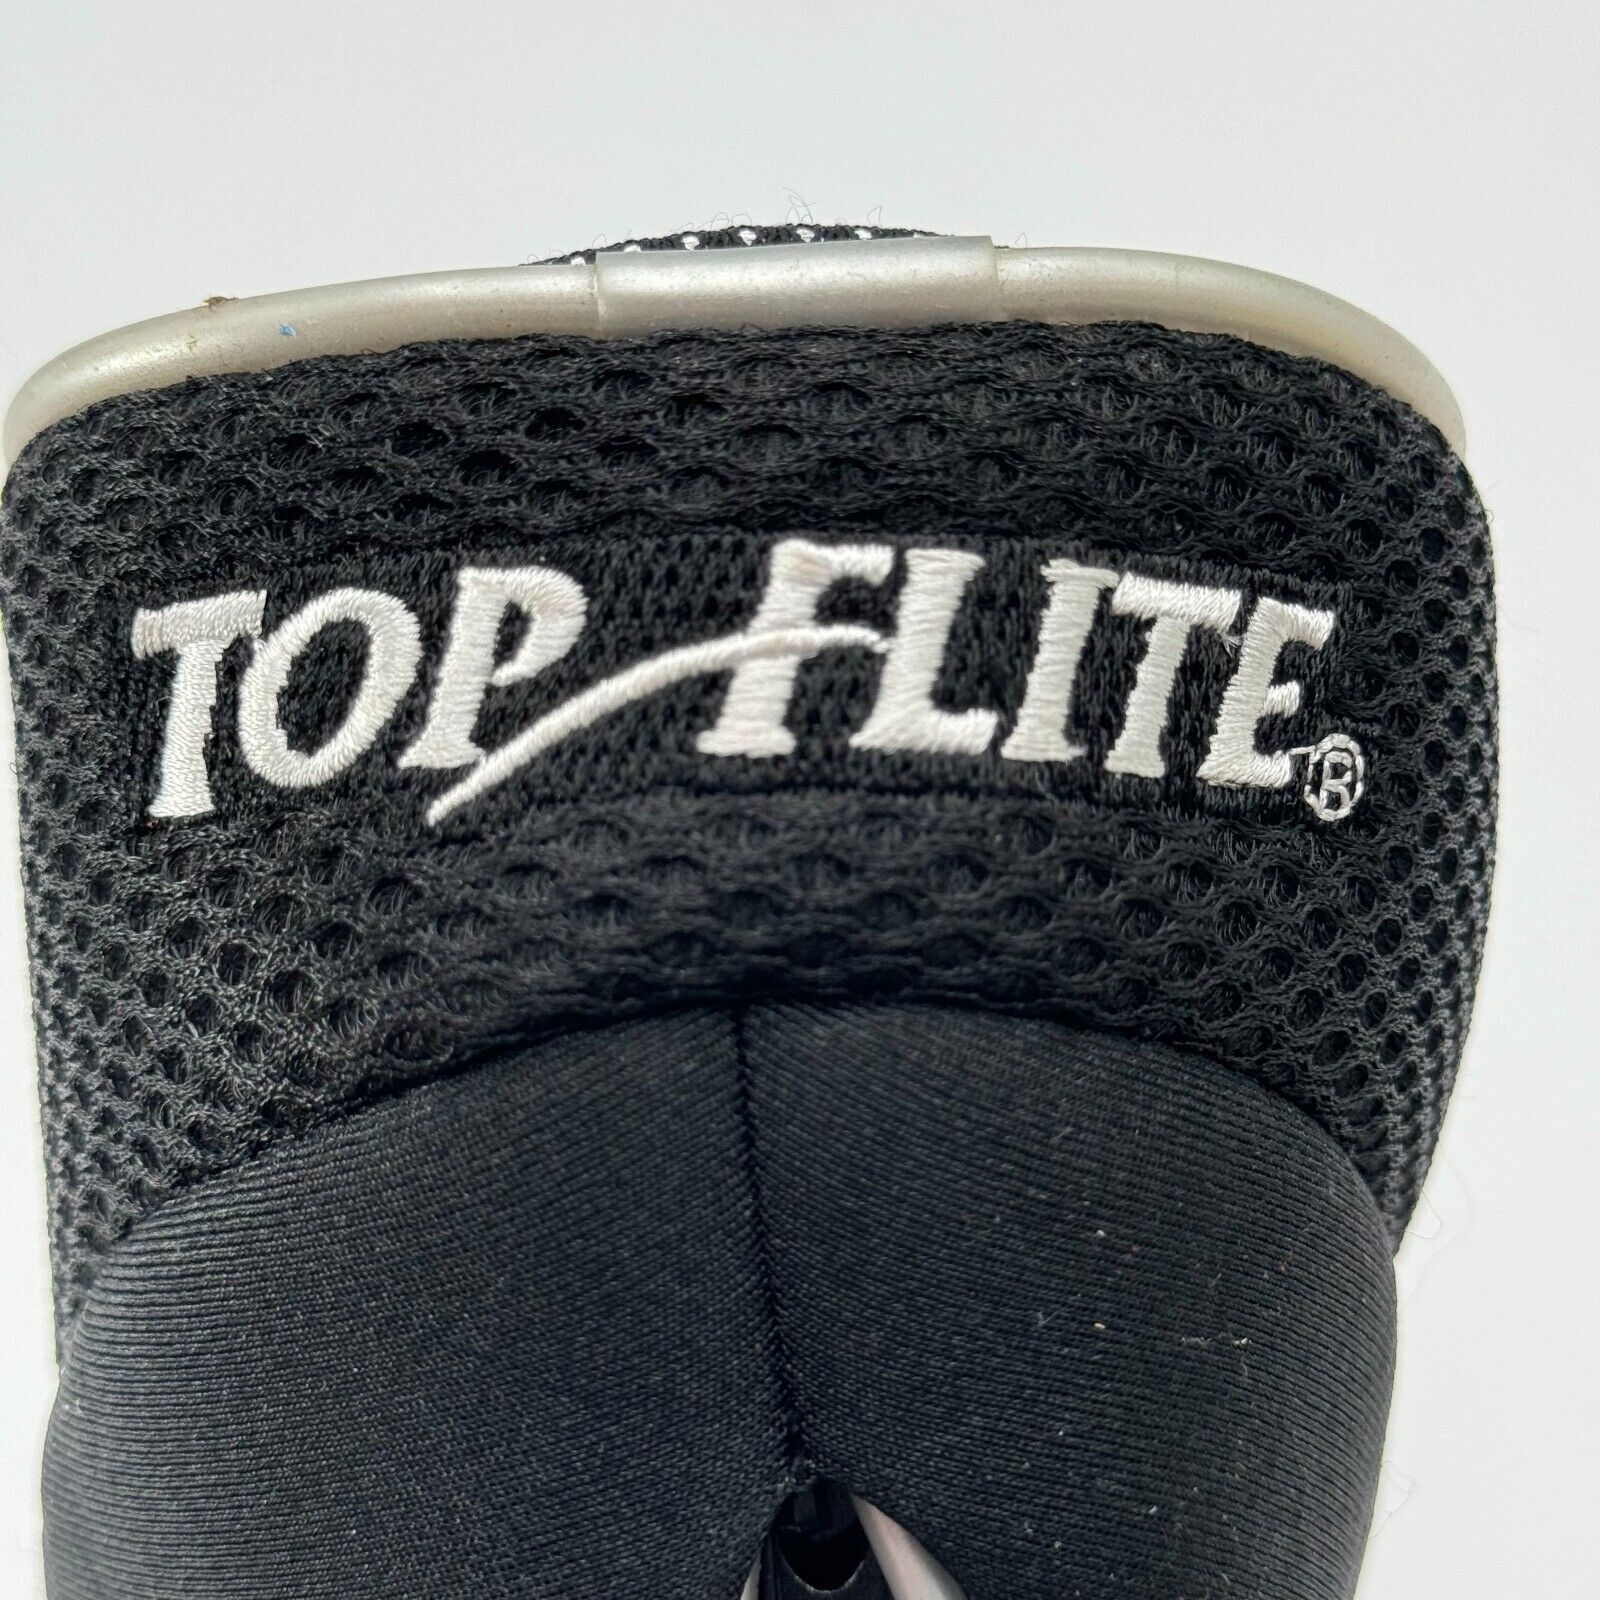 Top Flite 3 Wood Golf Club Driver Head Cover Black White Embroidered Logo Zipper